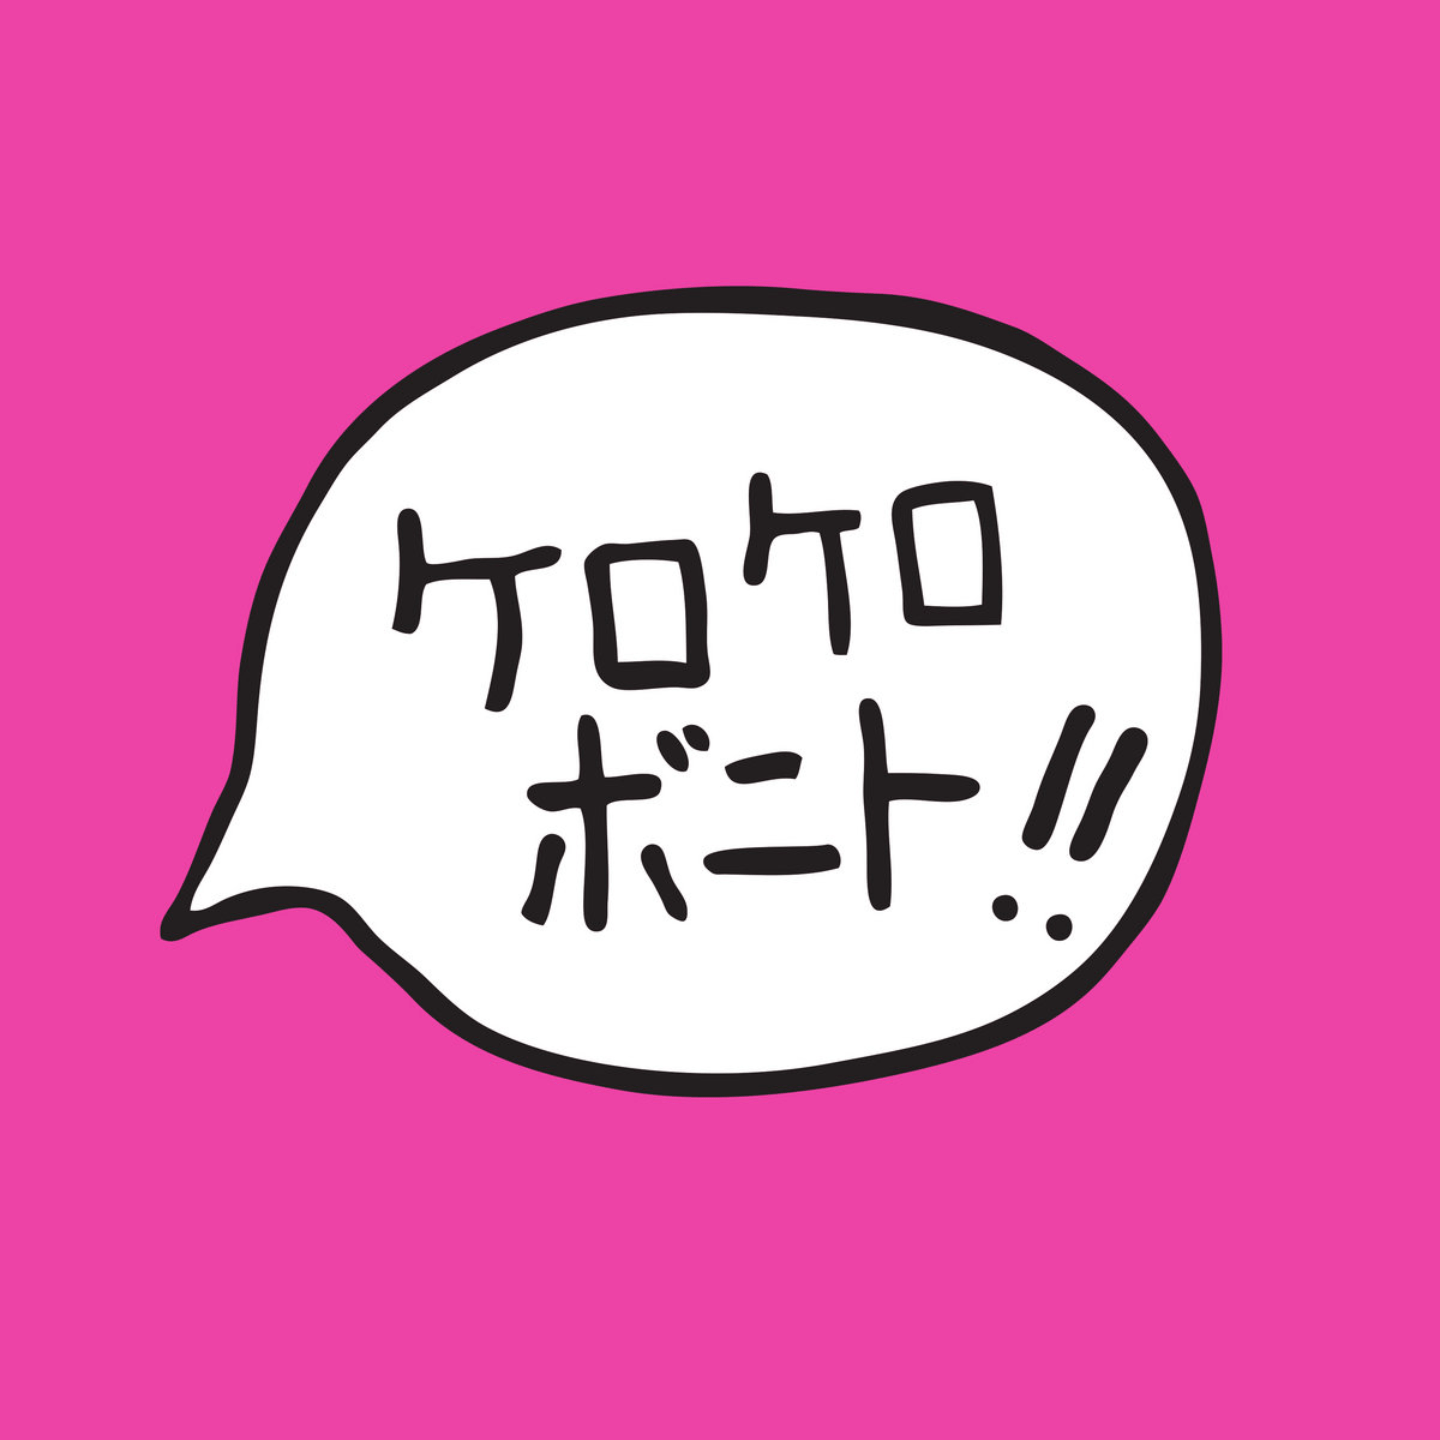 KERO KERO BONITO - Intro Bonito LP Hot Pink Vinyl